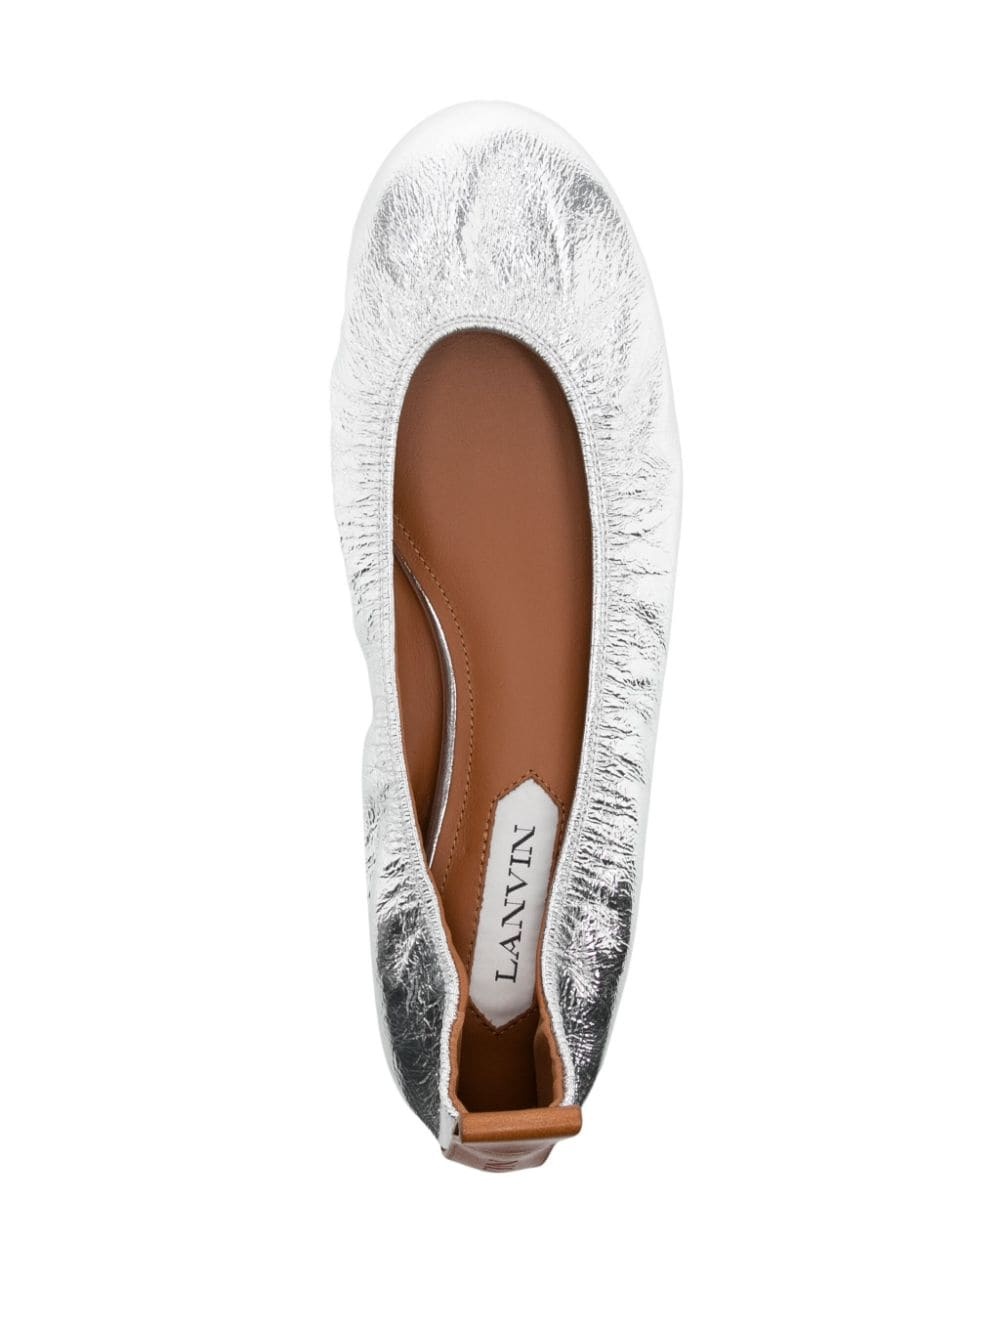 metallic leather ballerina shoes - 4